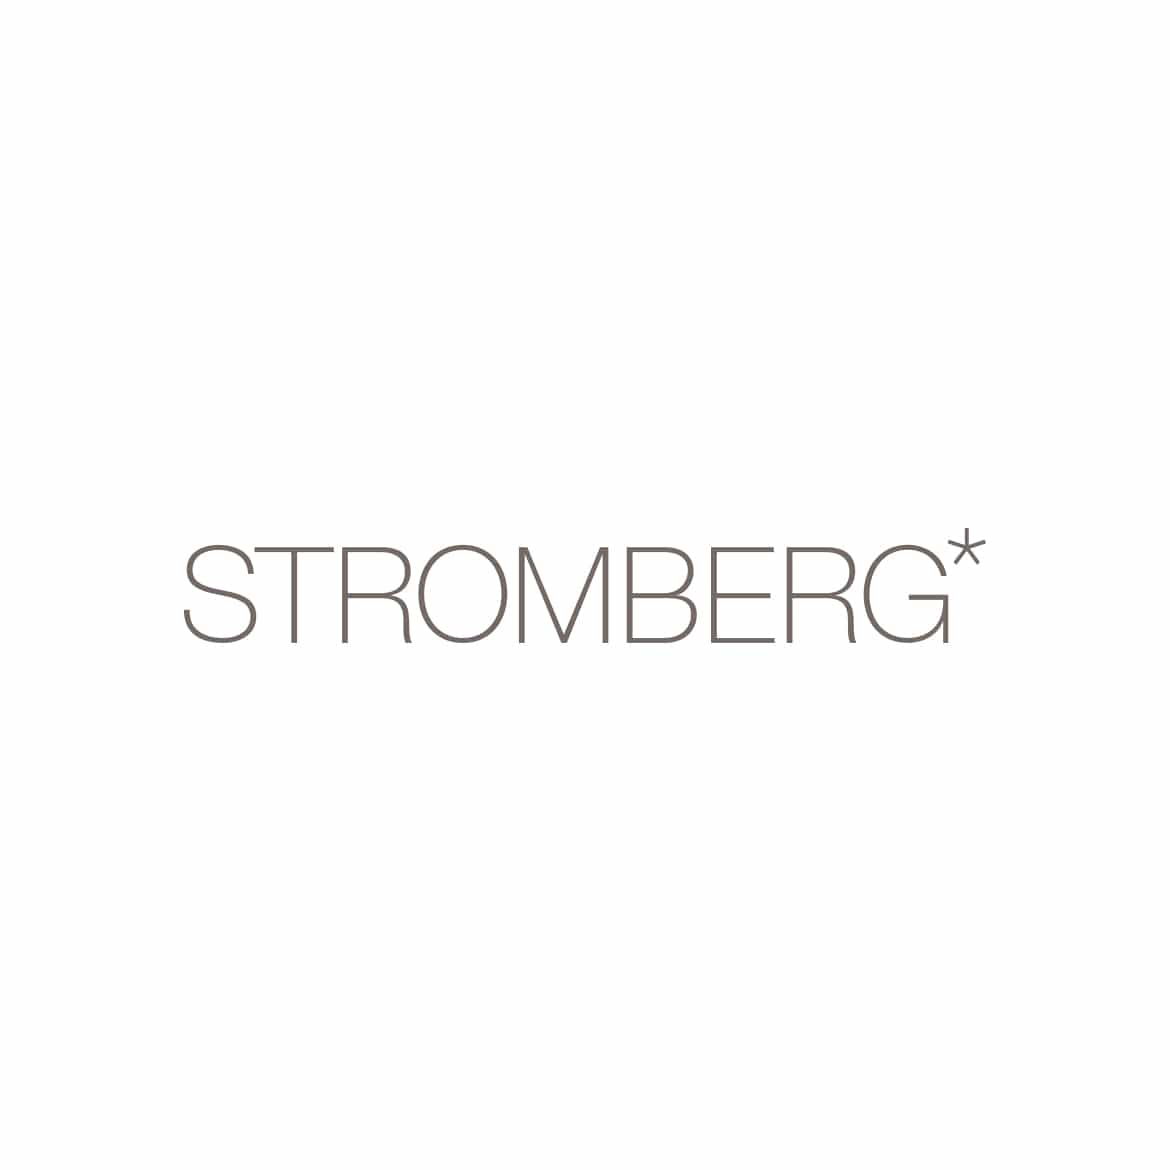 Logo STROMBERG*